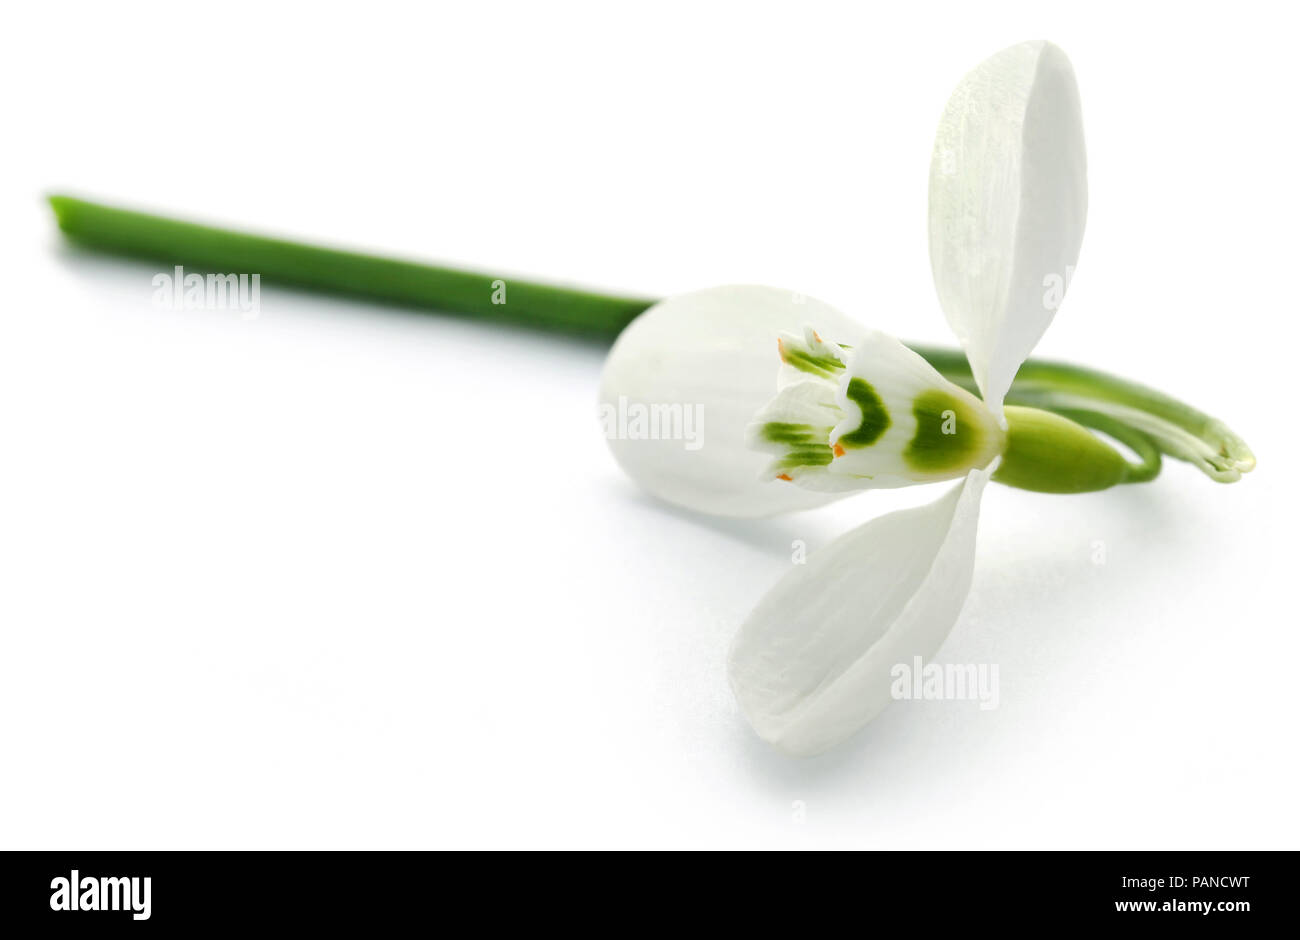 Snowdrop flower over white background Stock Photo